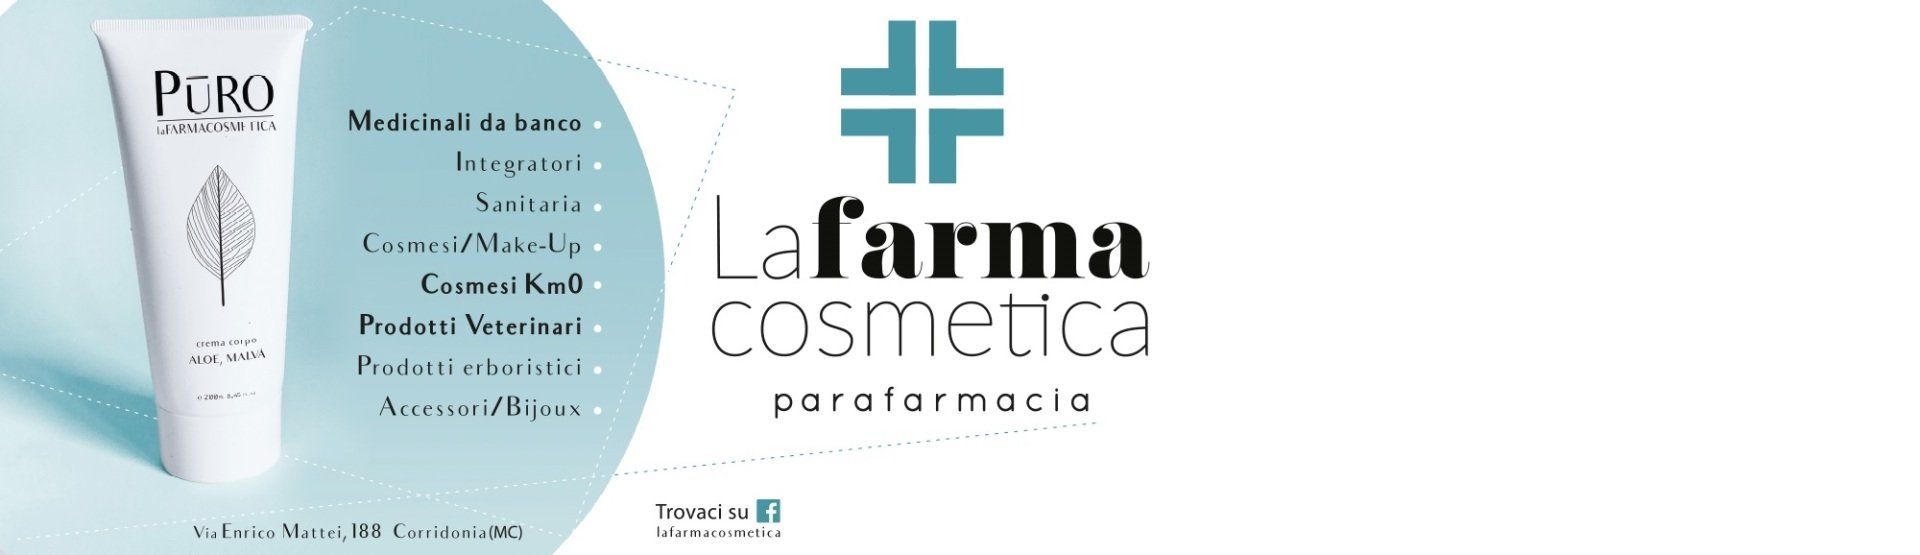 Farmacosmetica Corridonia, cosmetica, parafarmacia, integratori, medicinali, medicine